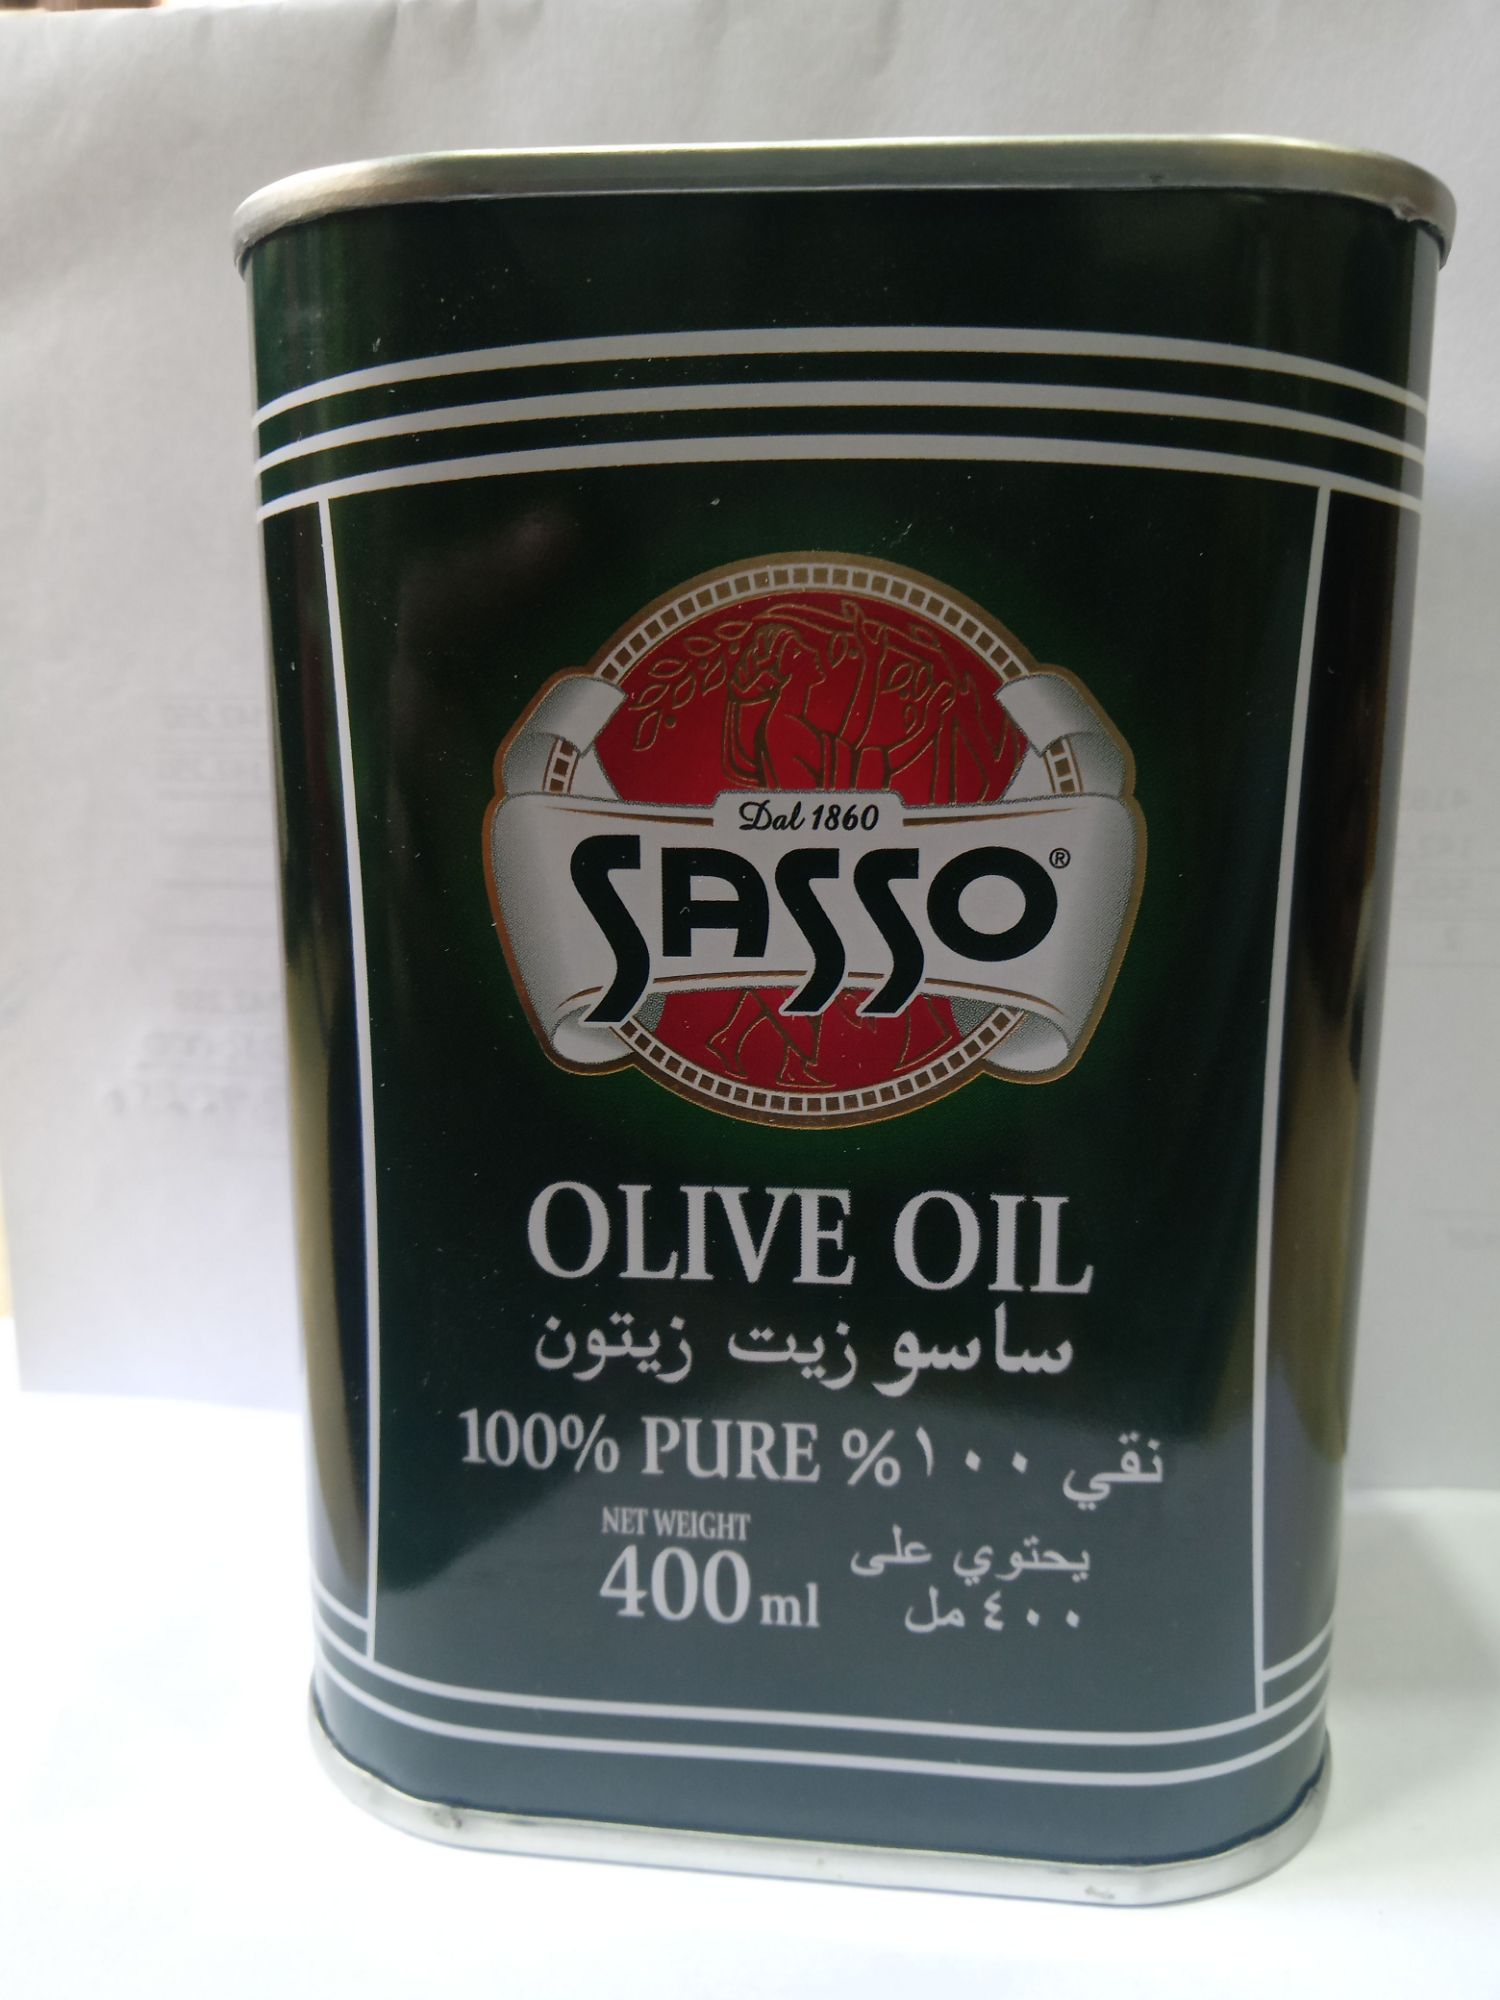 Sasso Olive Oil Pure 400 Ml